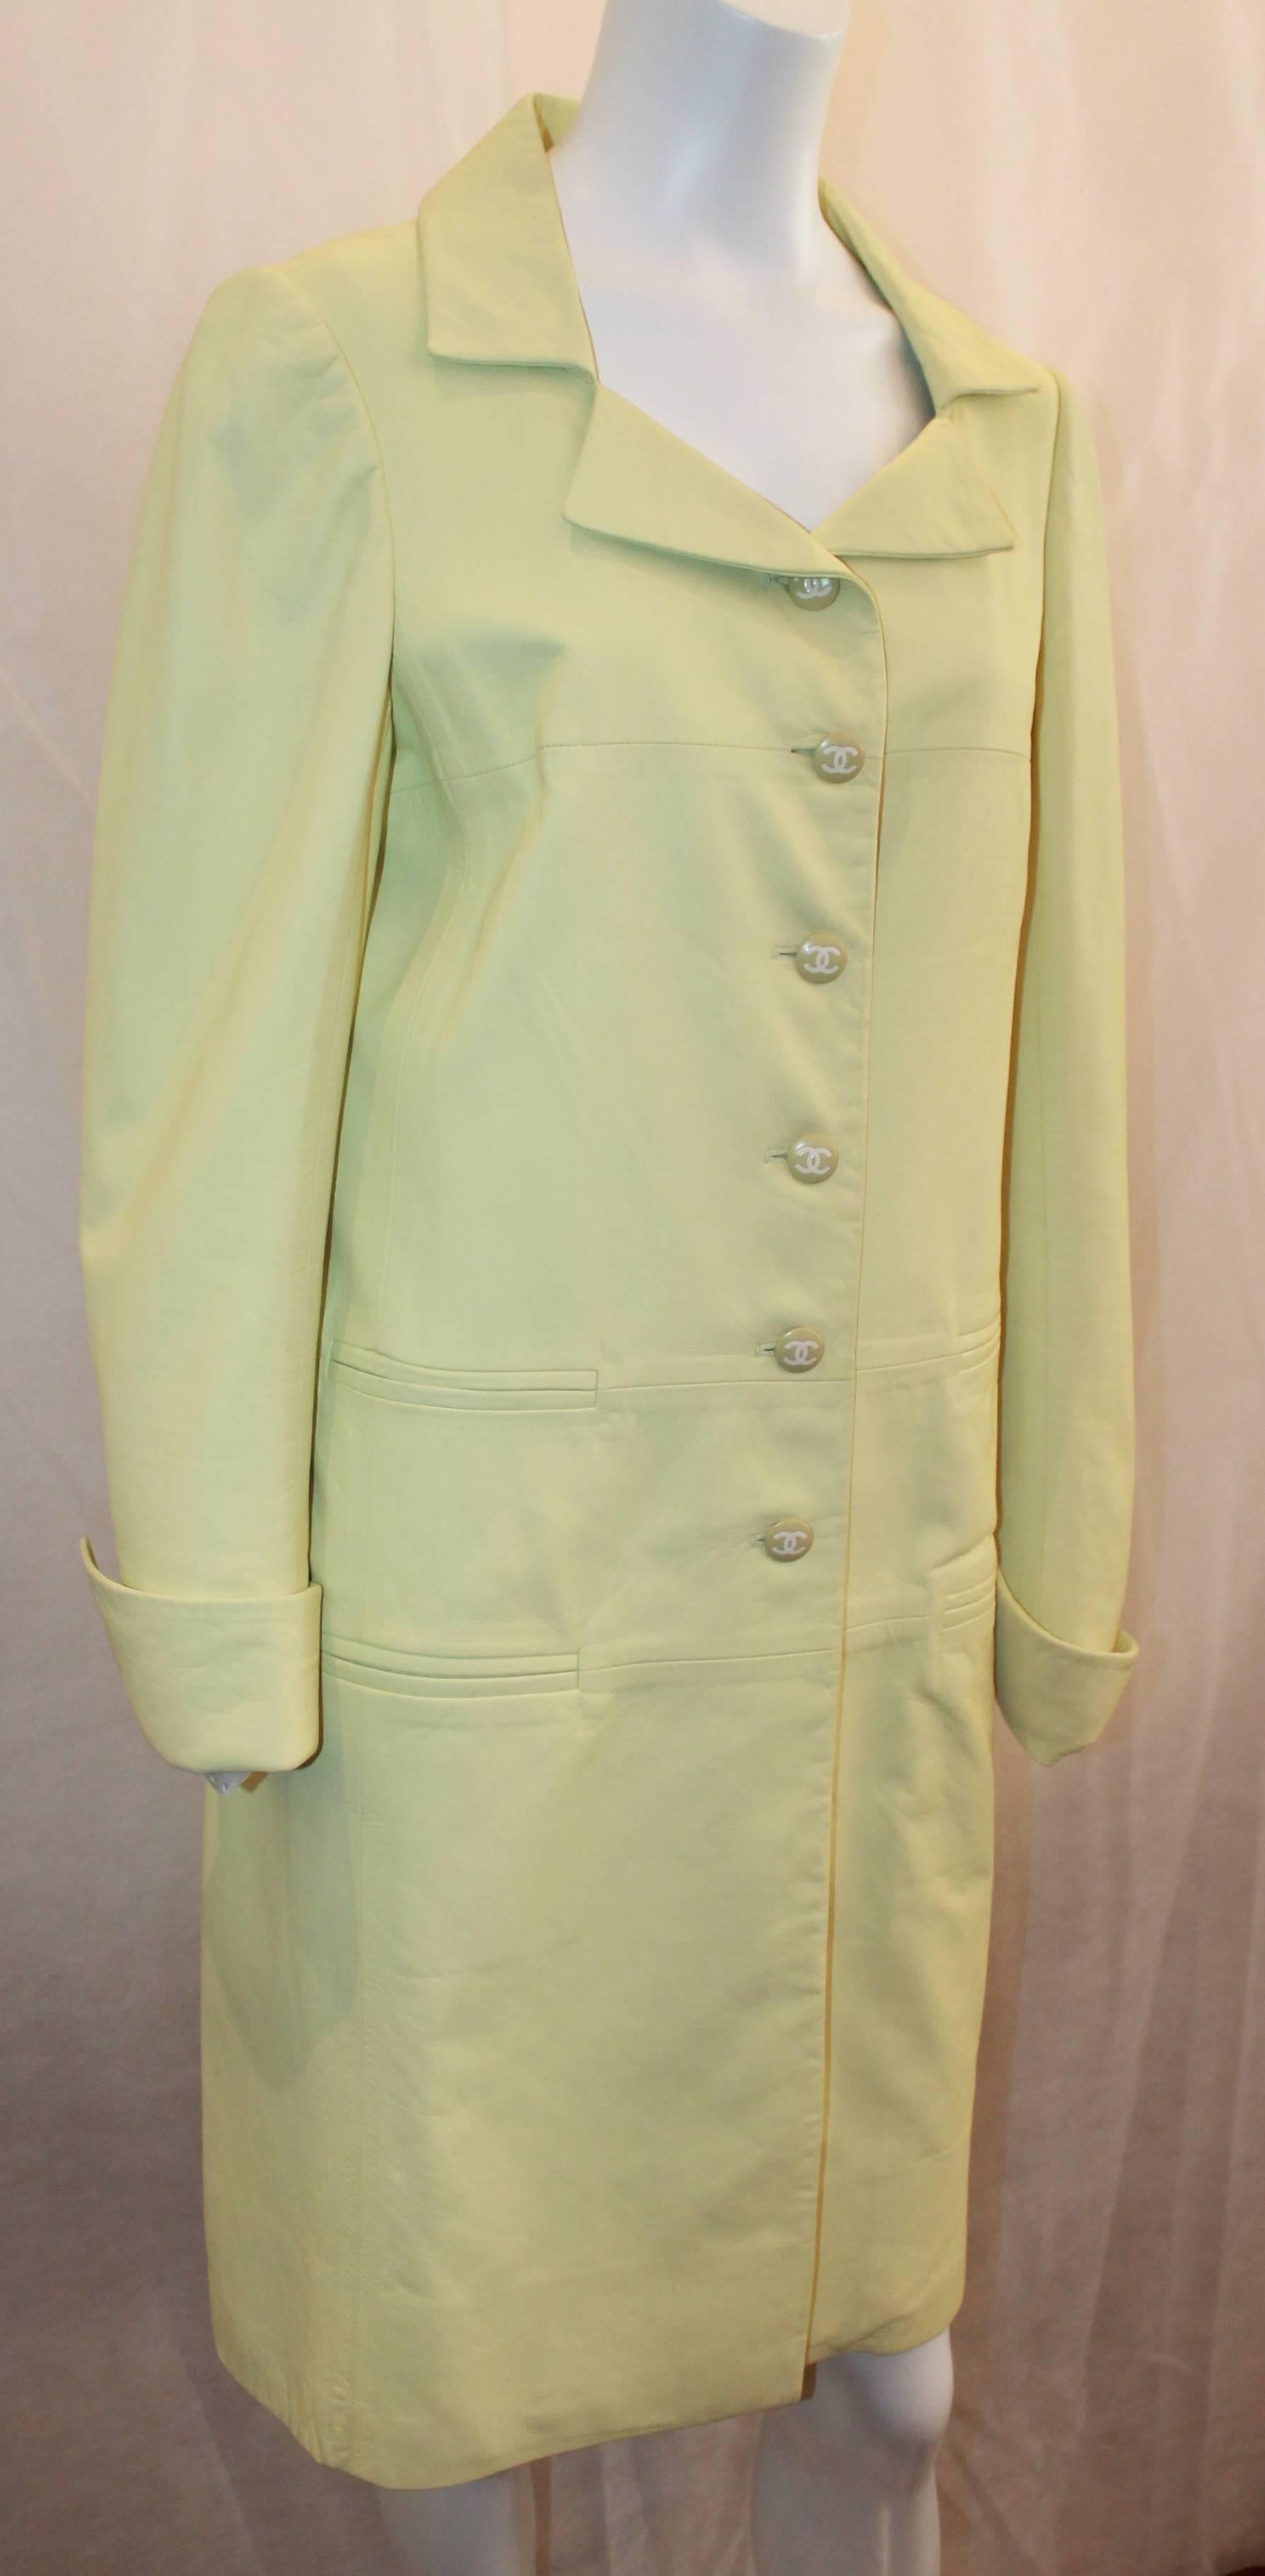 Chanel Chartreuse Lambskin 3/4 Coat - 40 - 04C. This beautiful 3/4 coat has 4 pocket slits, big 